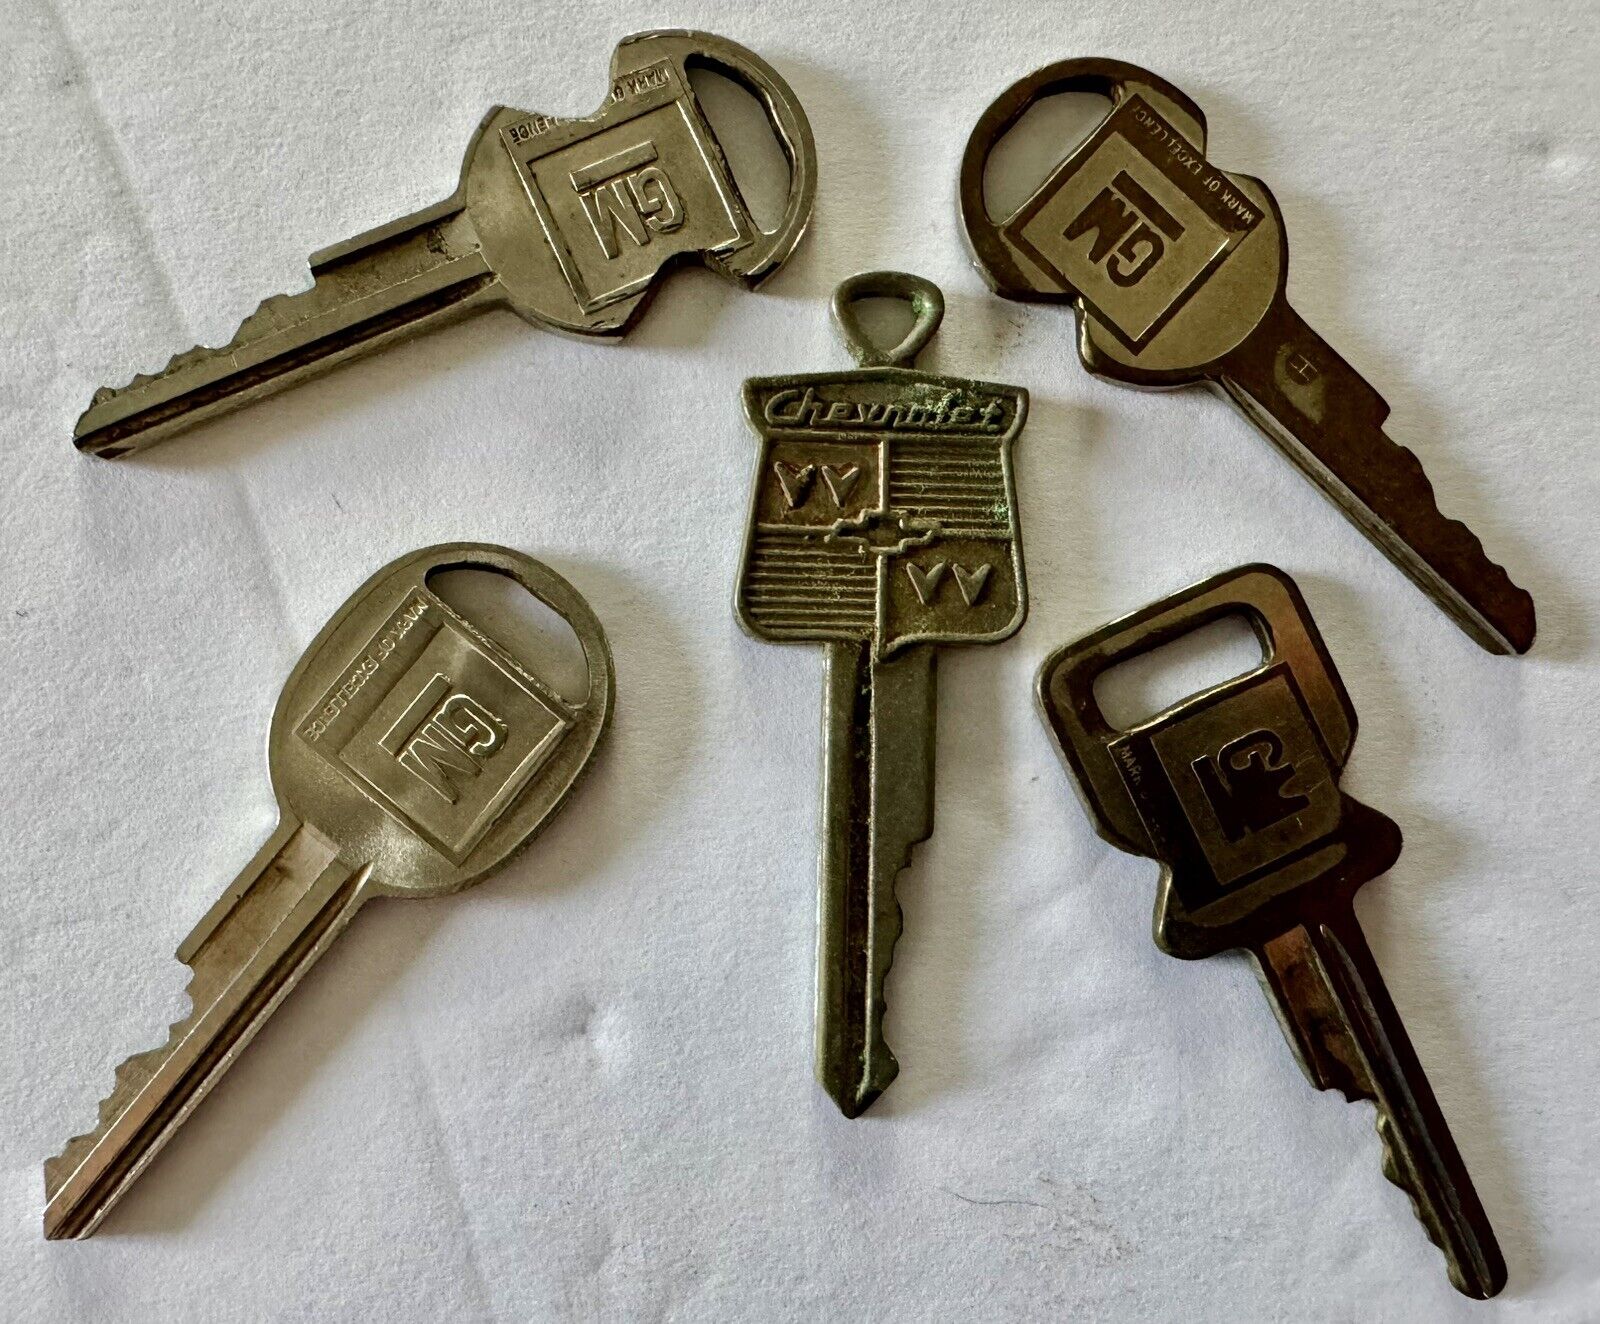 Lot Of 5 Chevrolet GM Keys Collectible Vintage Antique Car Truck Auto Keys